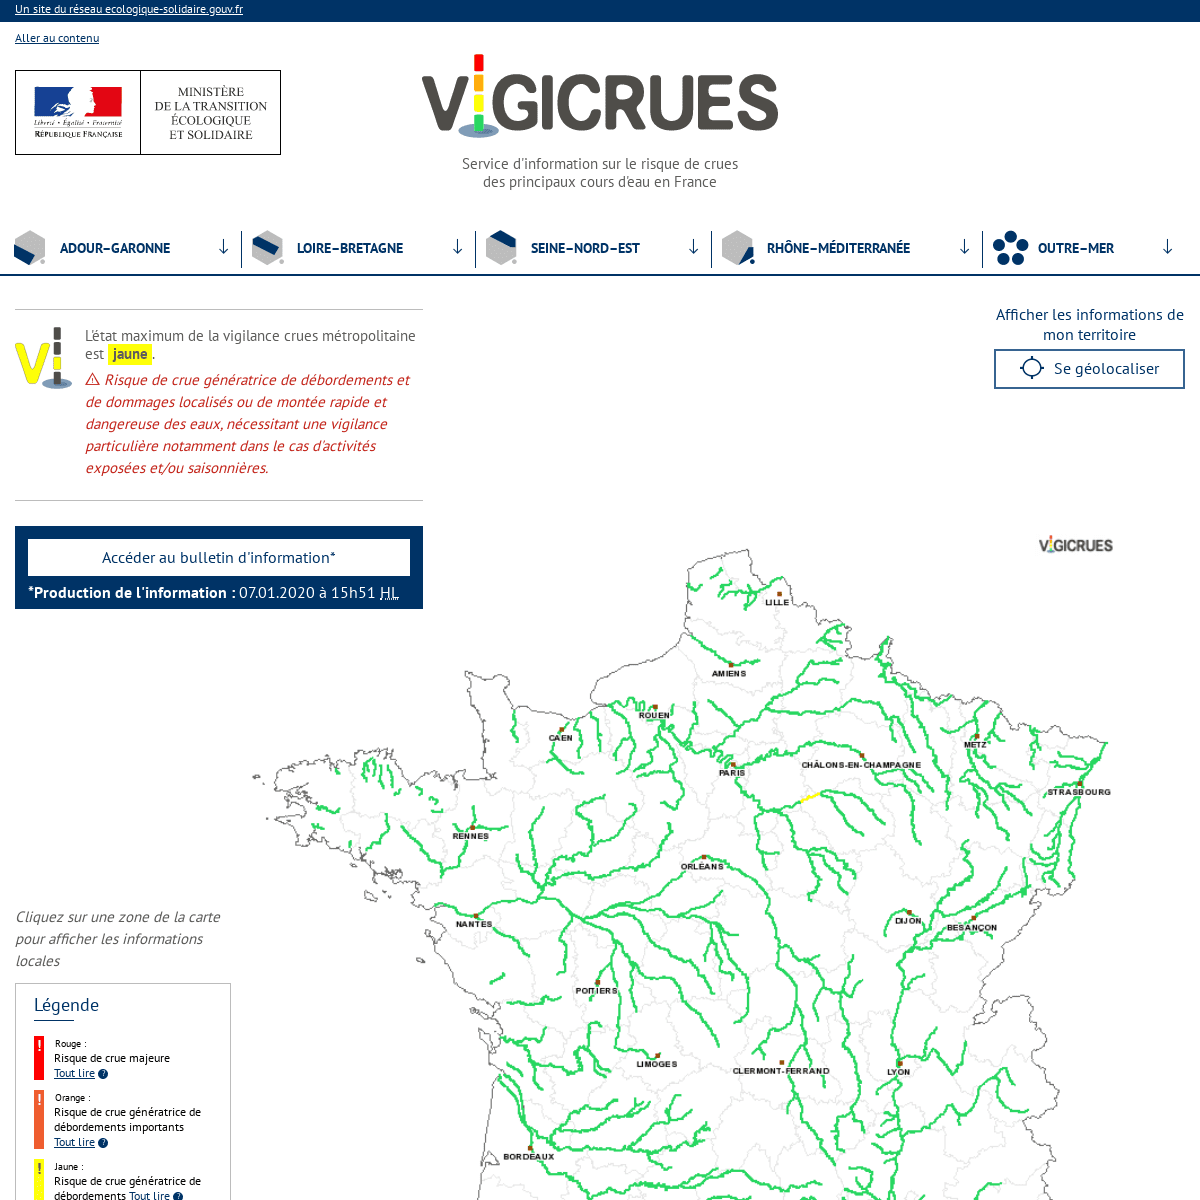 A complete backup of vigicrues.gouv.fr